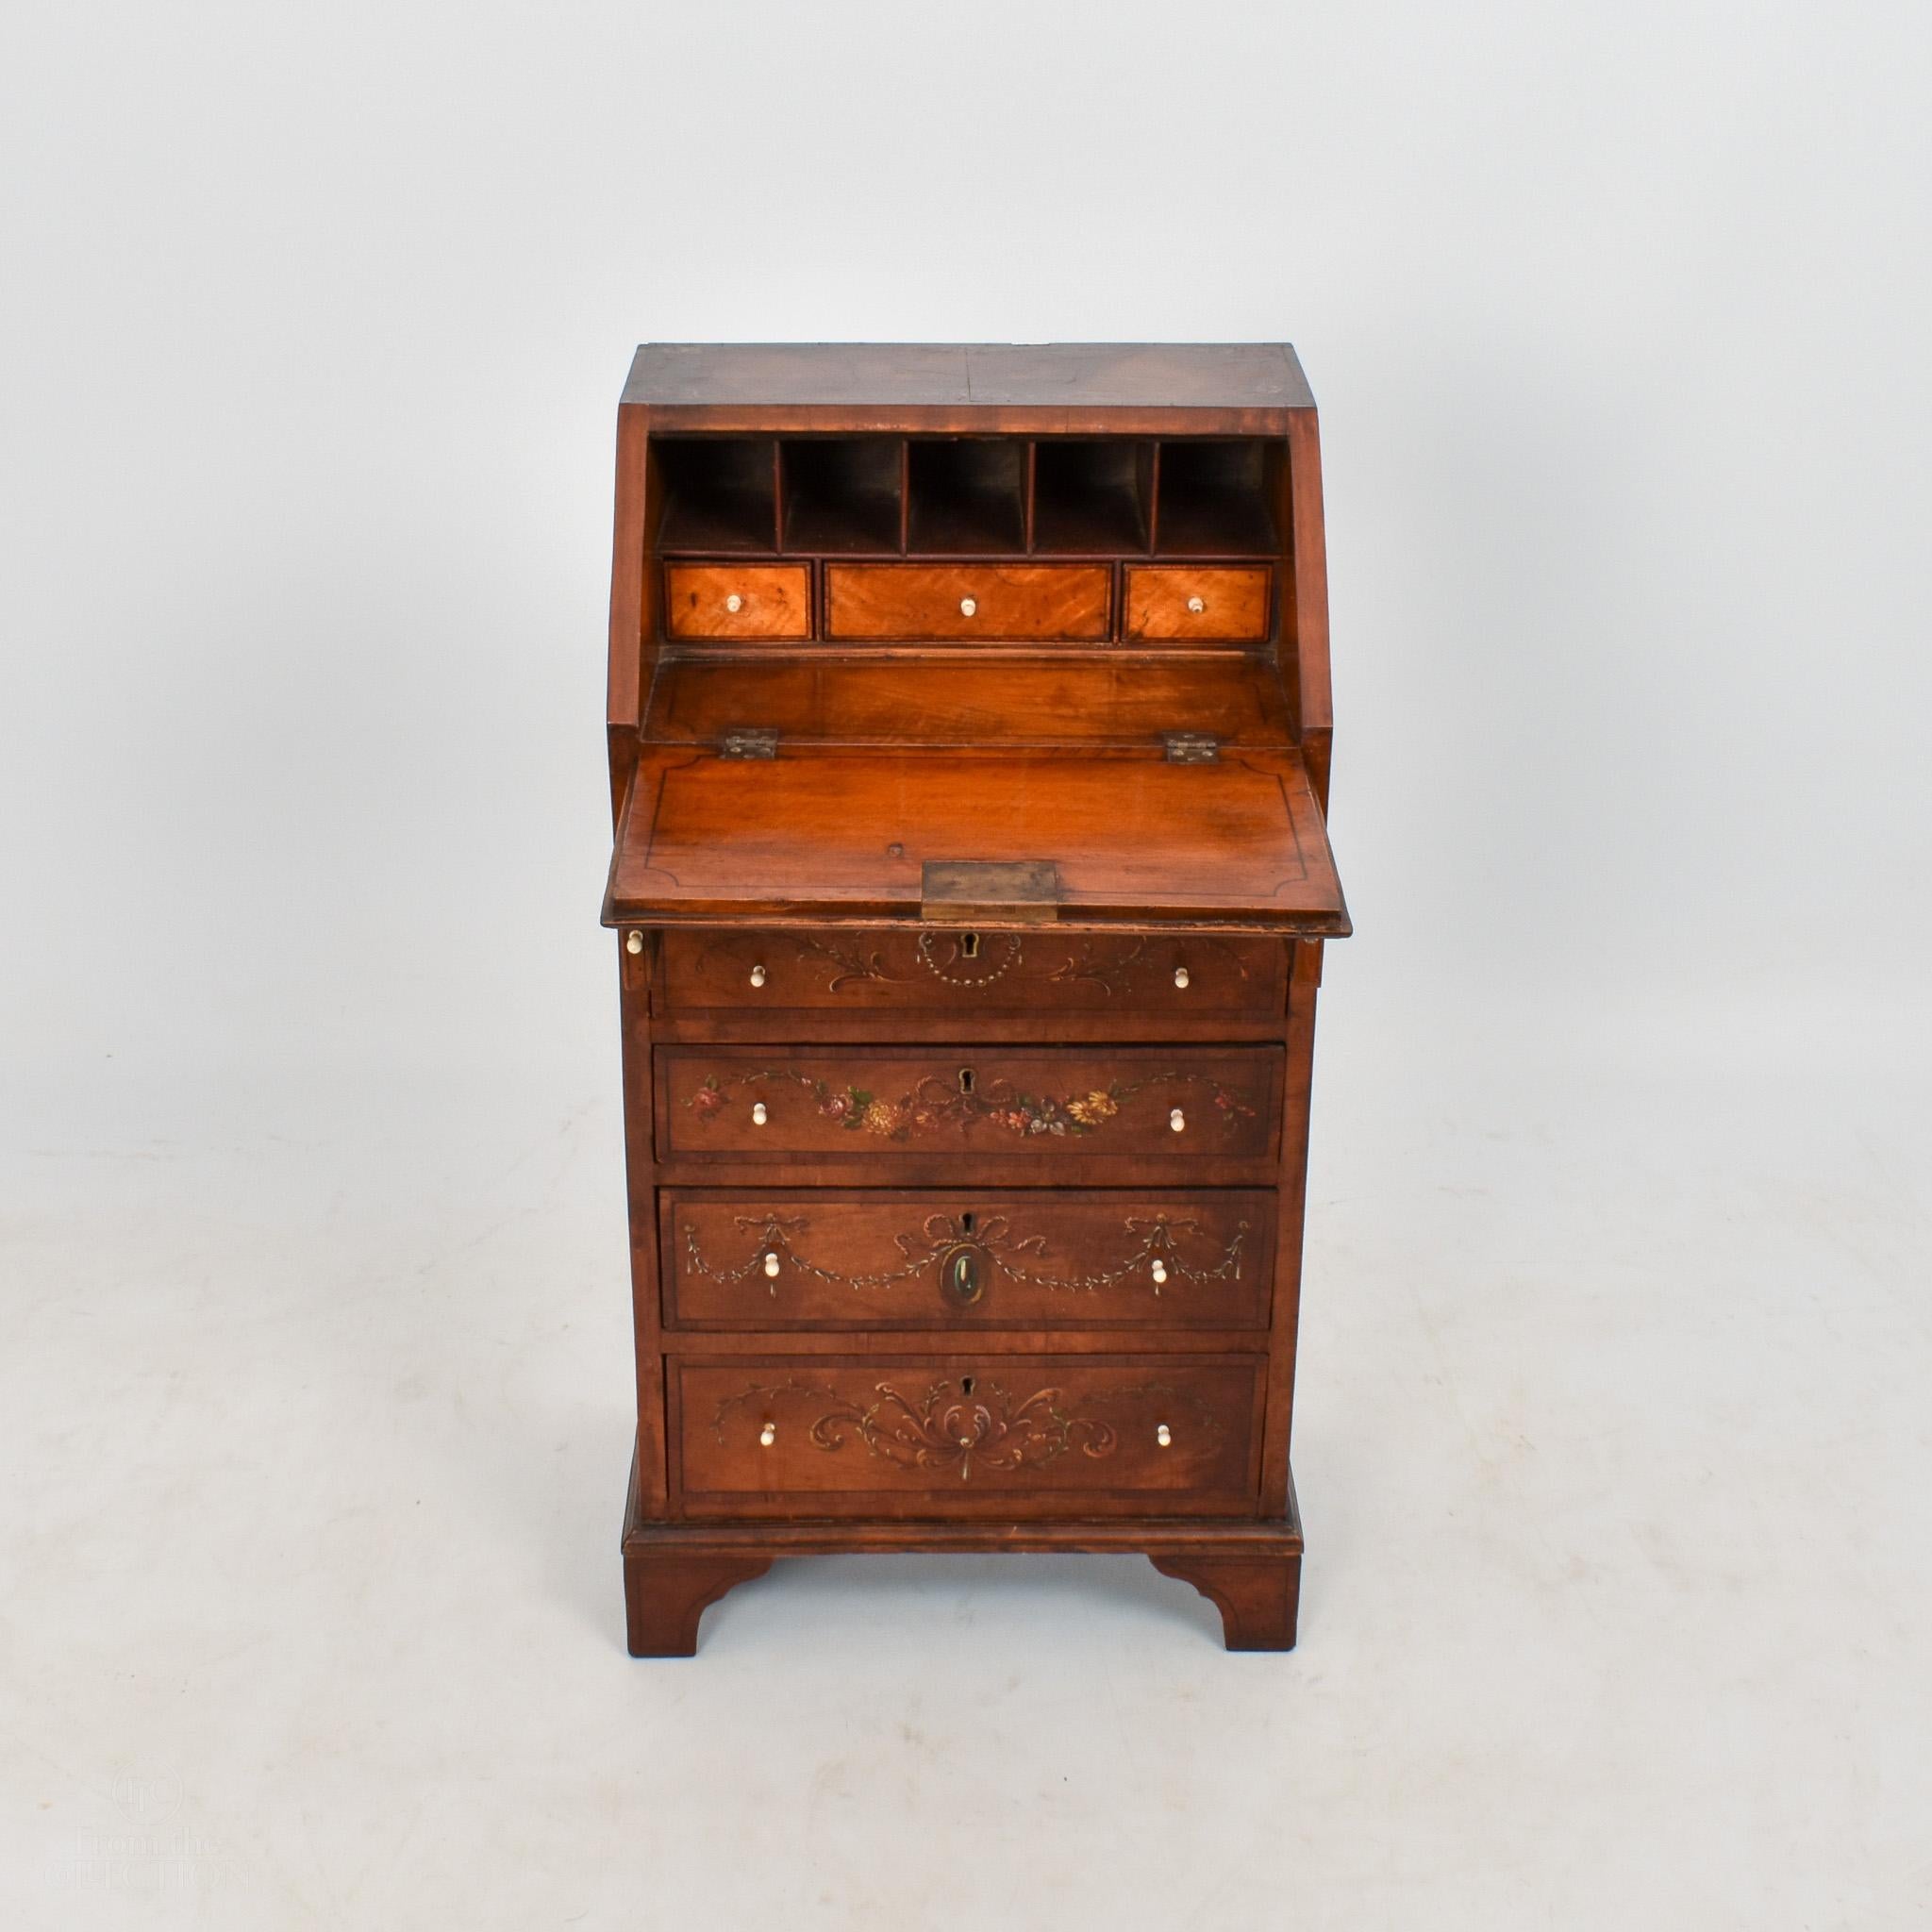 George II Childs Exceptionally Rare Satinwood Bureau Desk circa 1770 For Sale